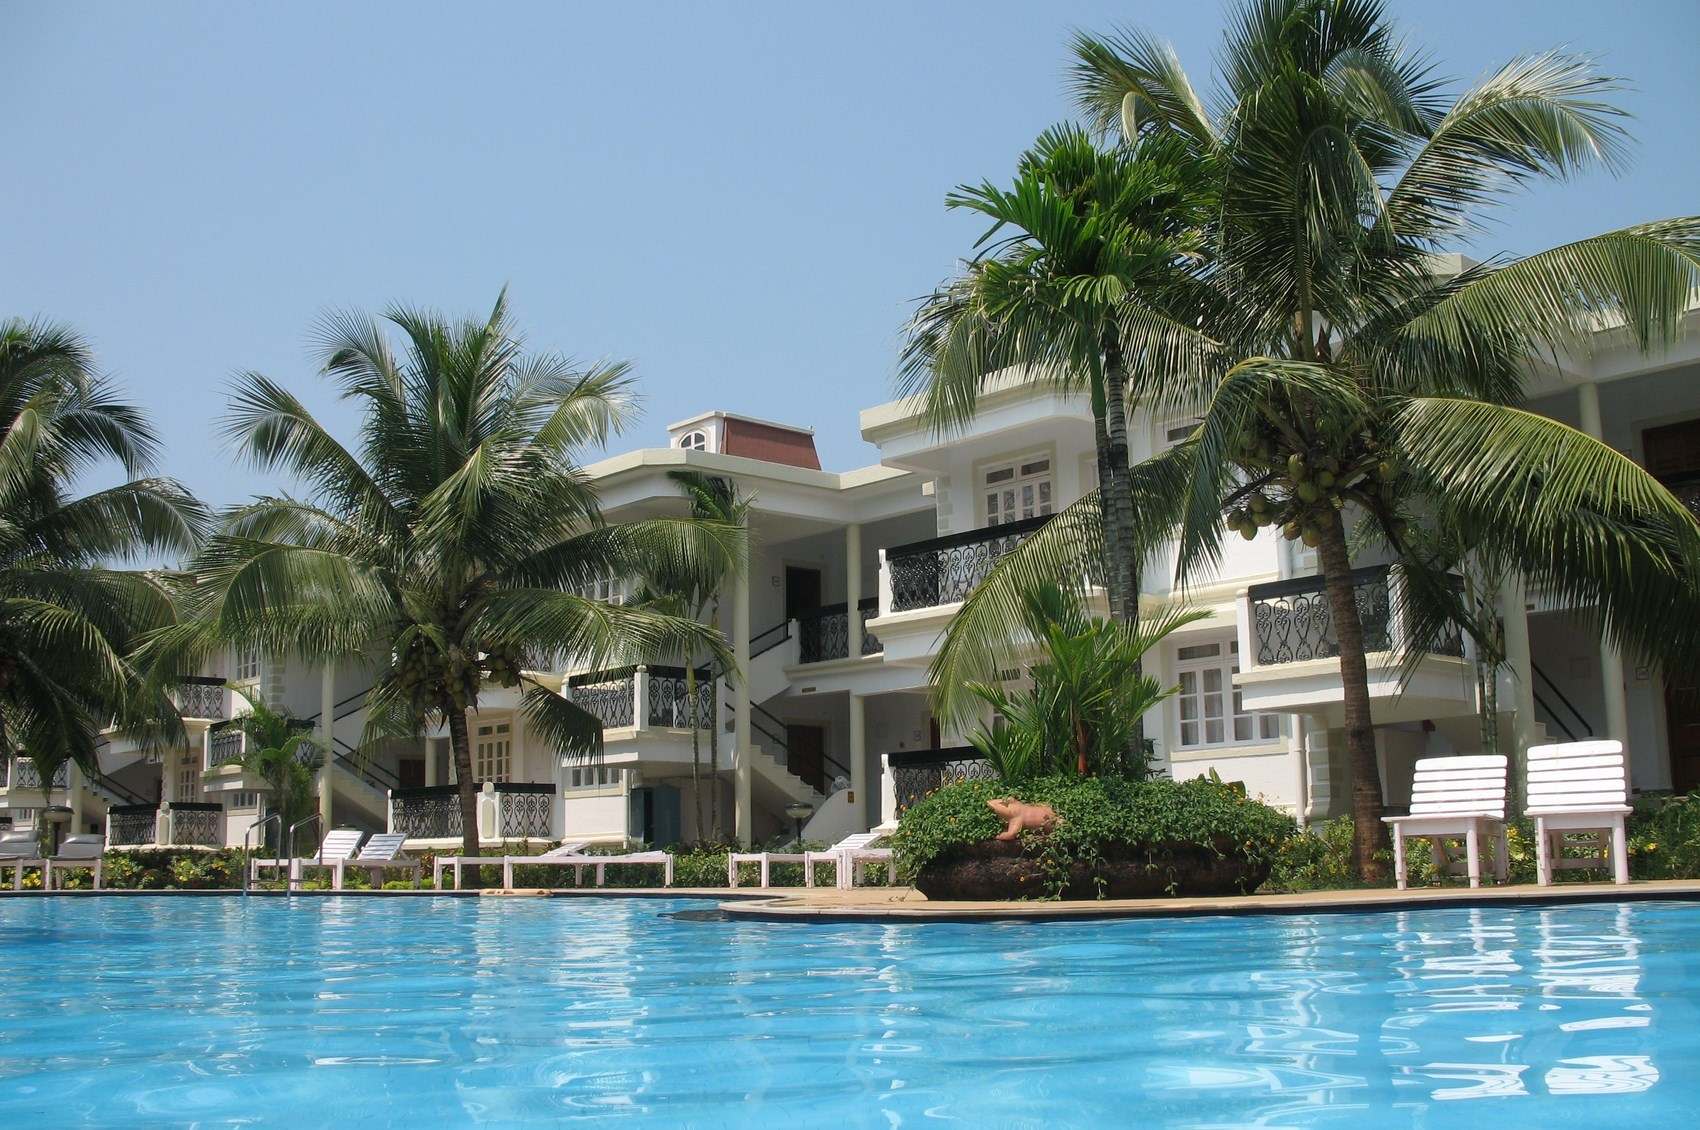 South Goa Beach Resort